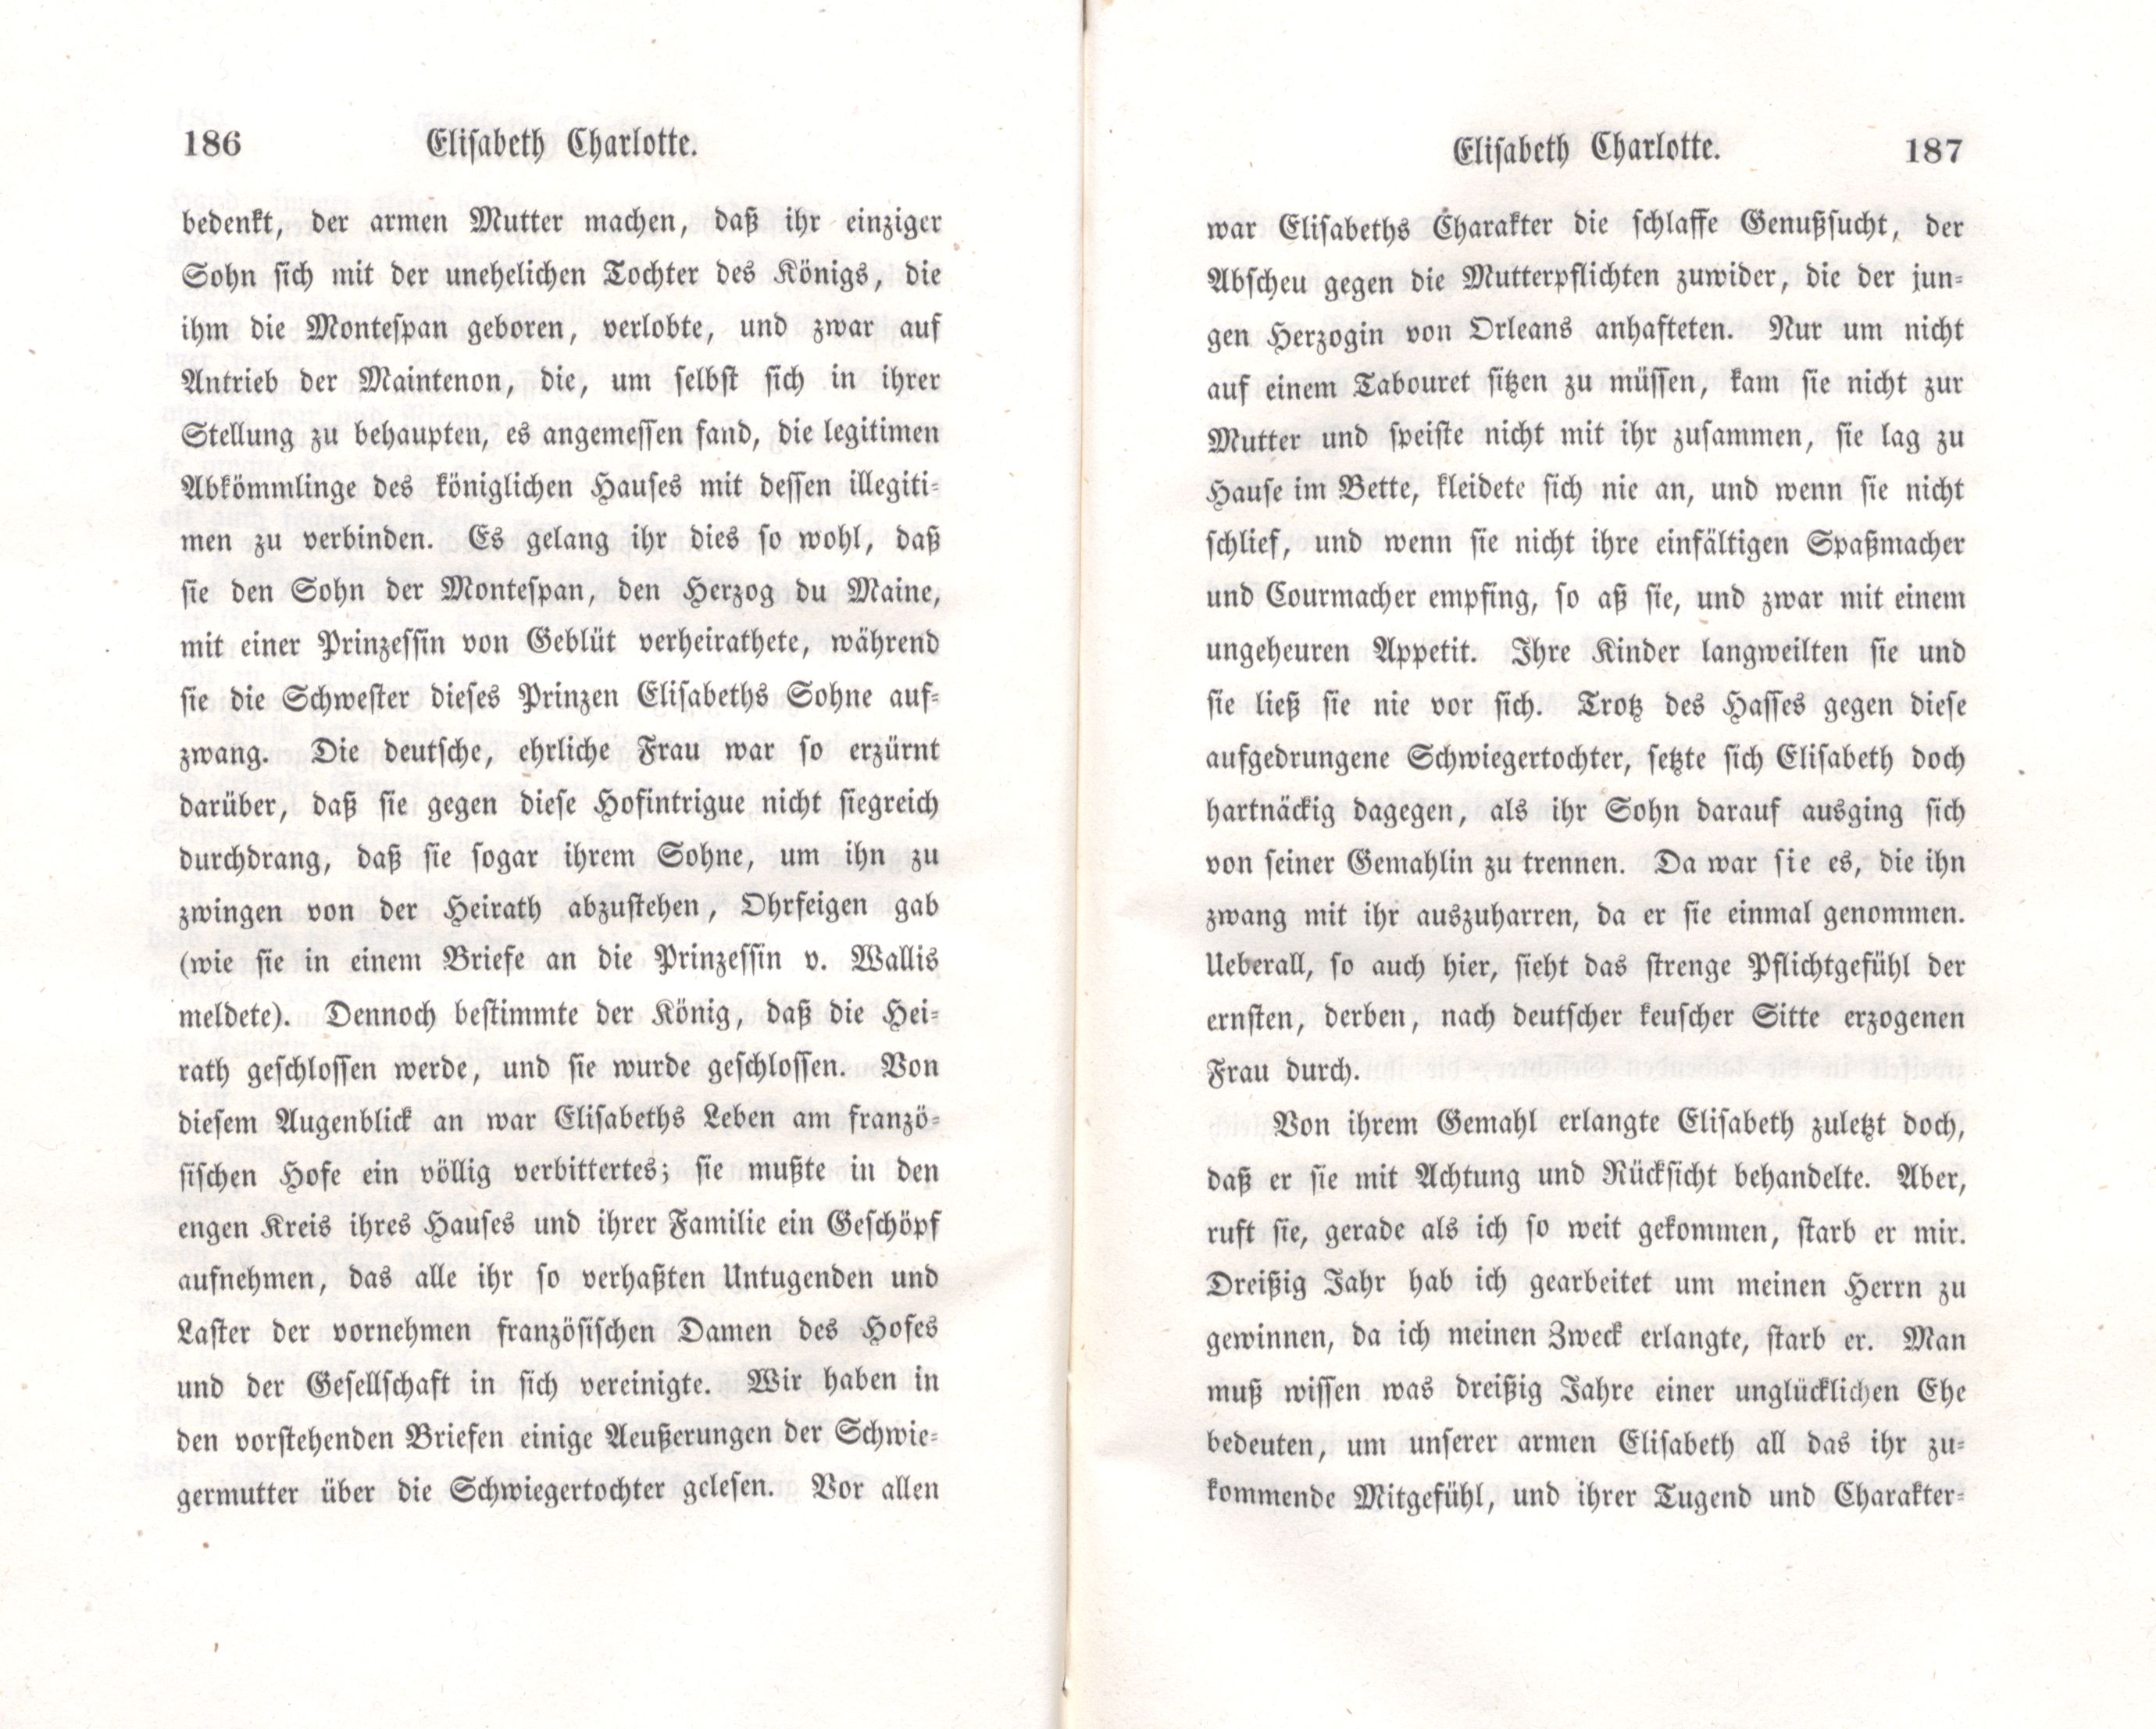 Berühmte deutsche Frauen des achtzehnten Jahrhunderts [2] (1848) | 99. (186-187) Основной текст